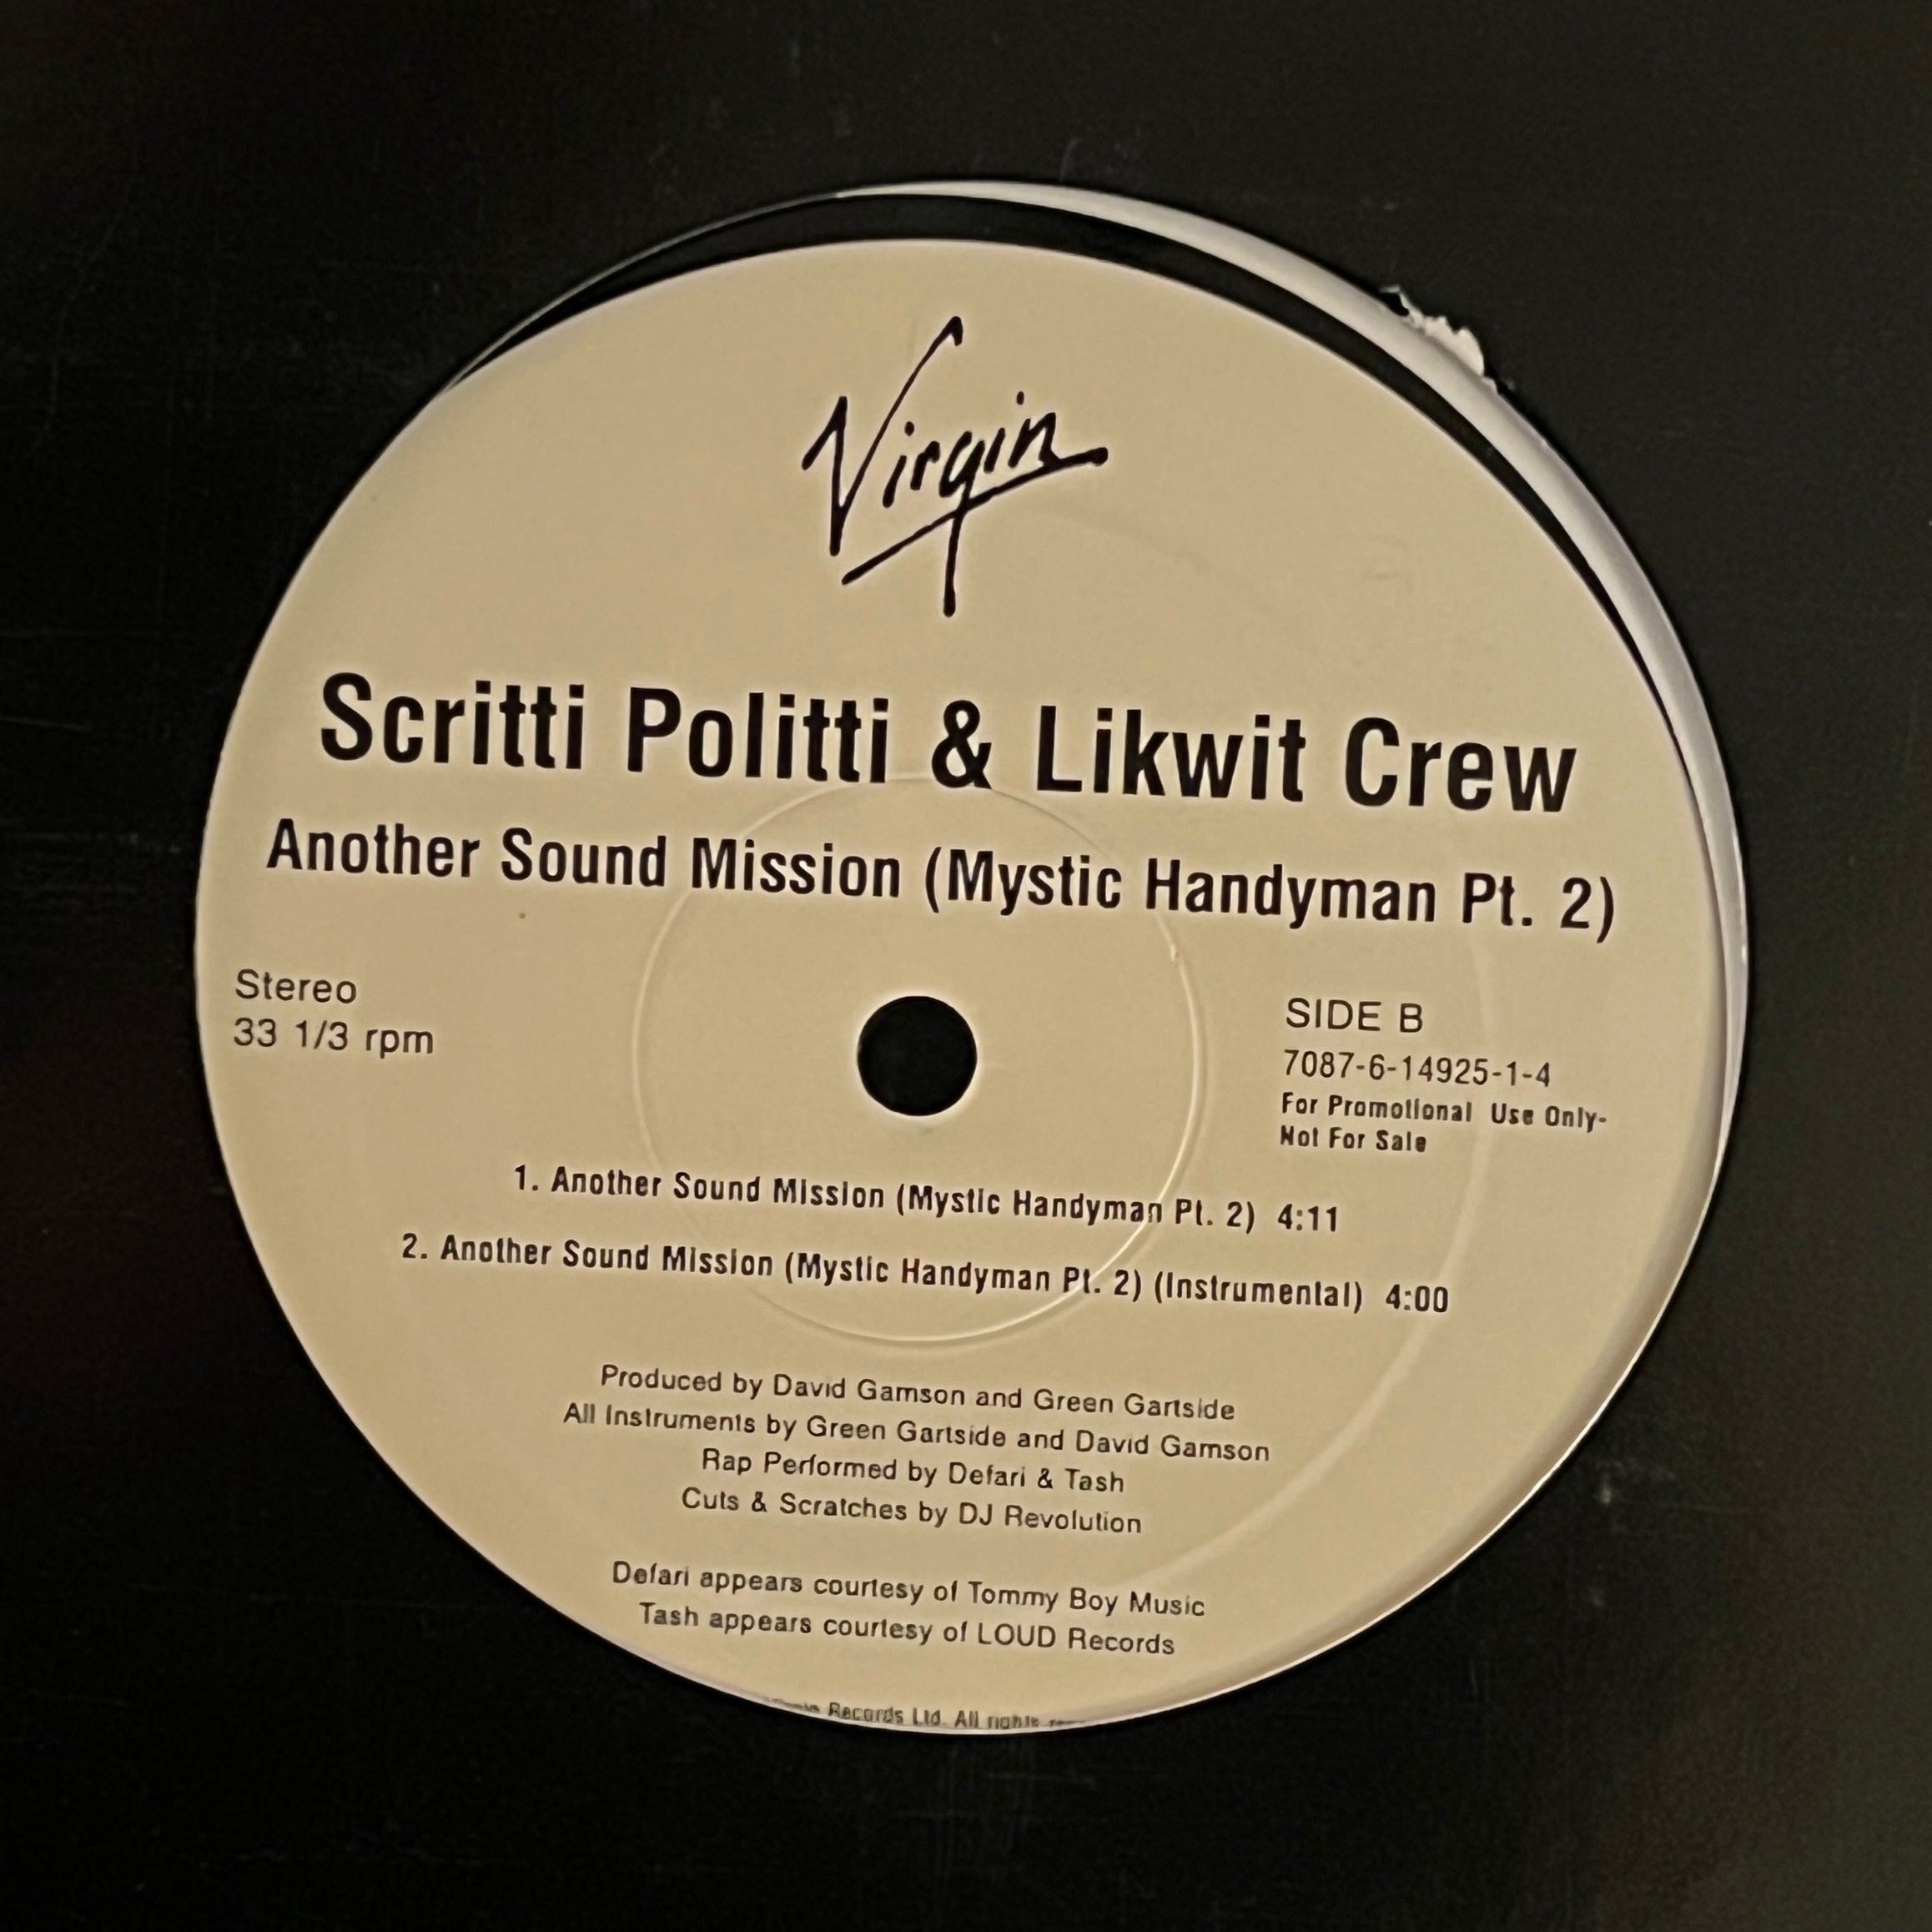 Scritti Politti & Likwit Crew - Another Sound Mission (Mystic Handyman Pt. 2) (12" Promo) VG+